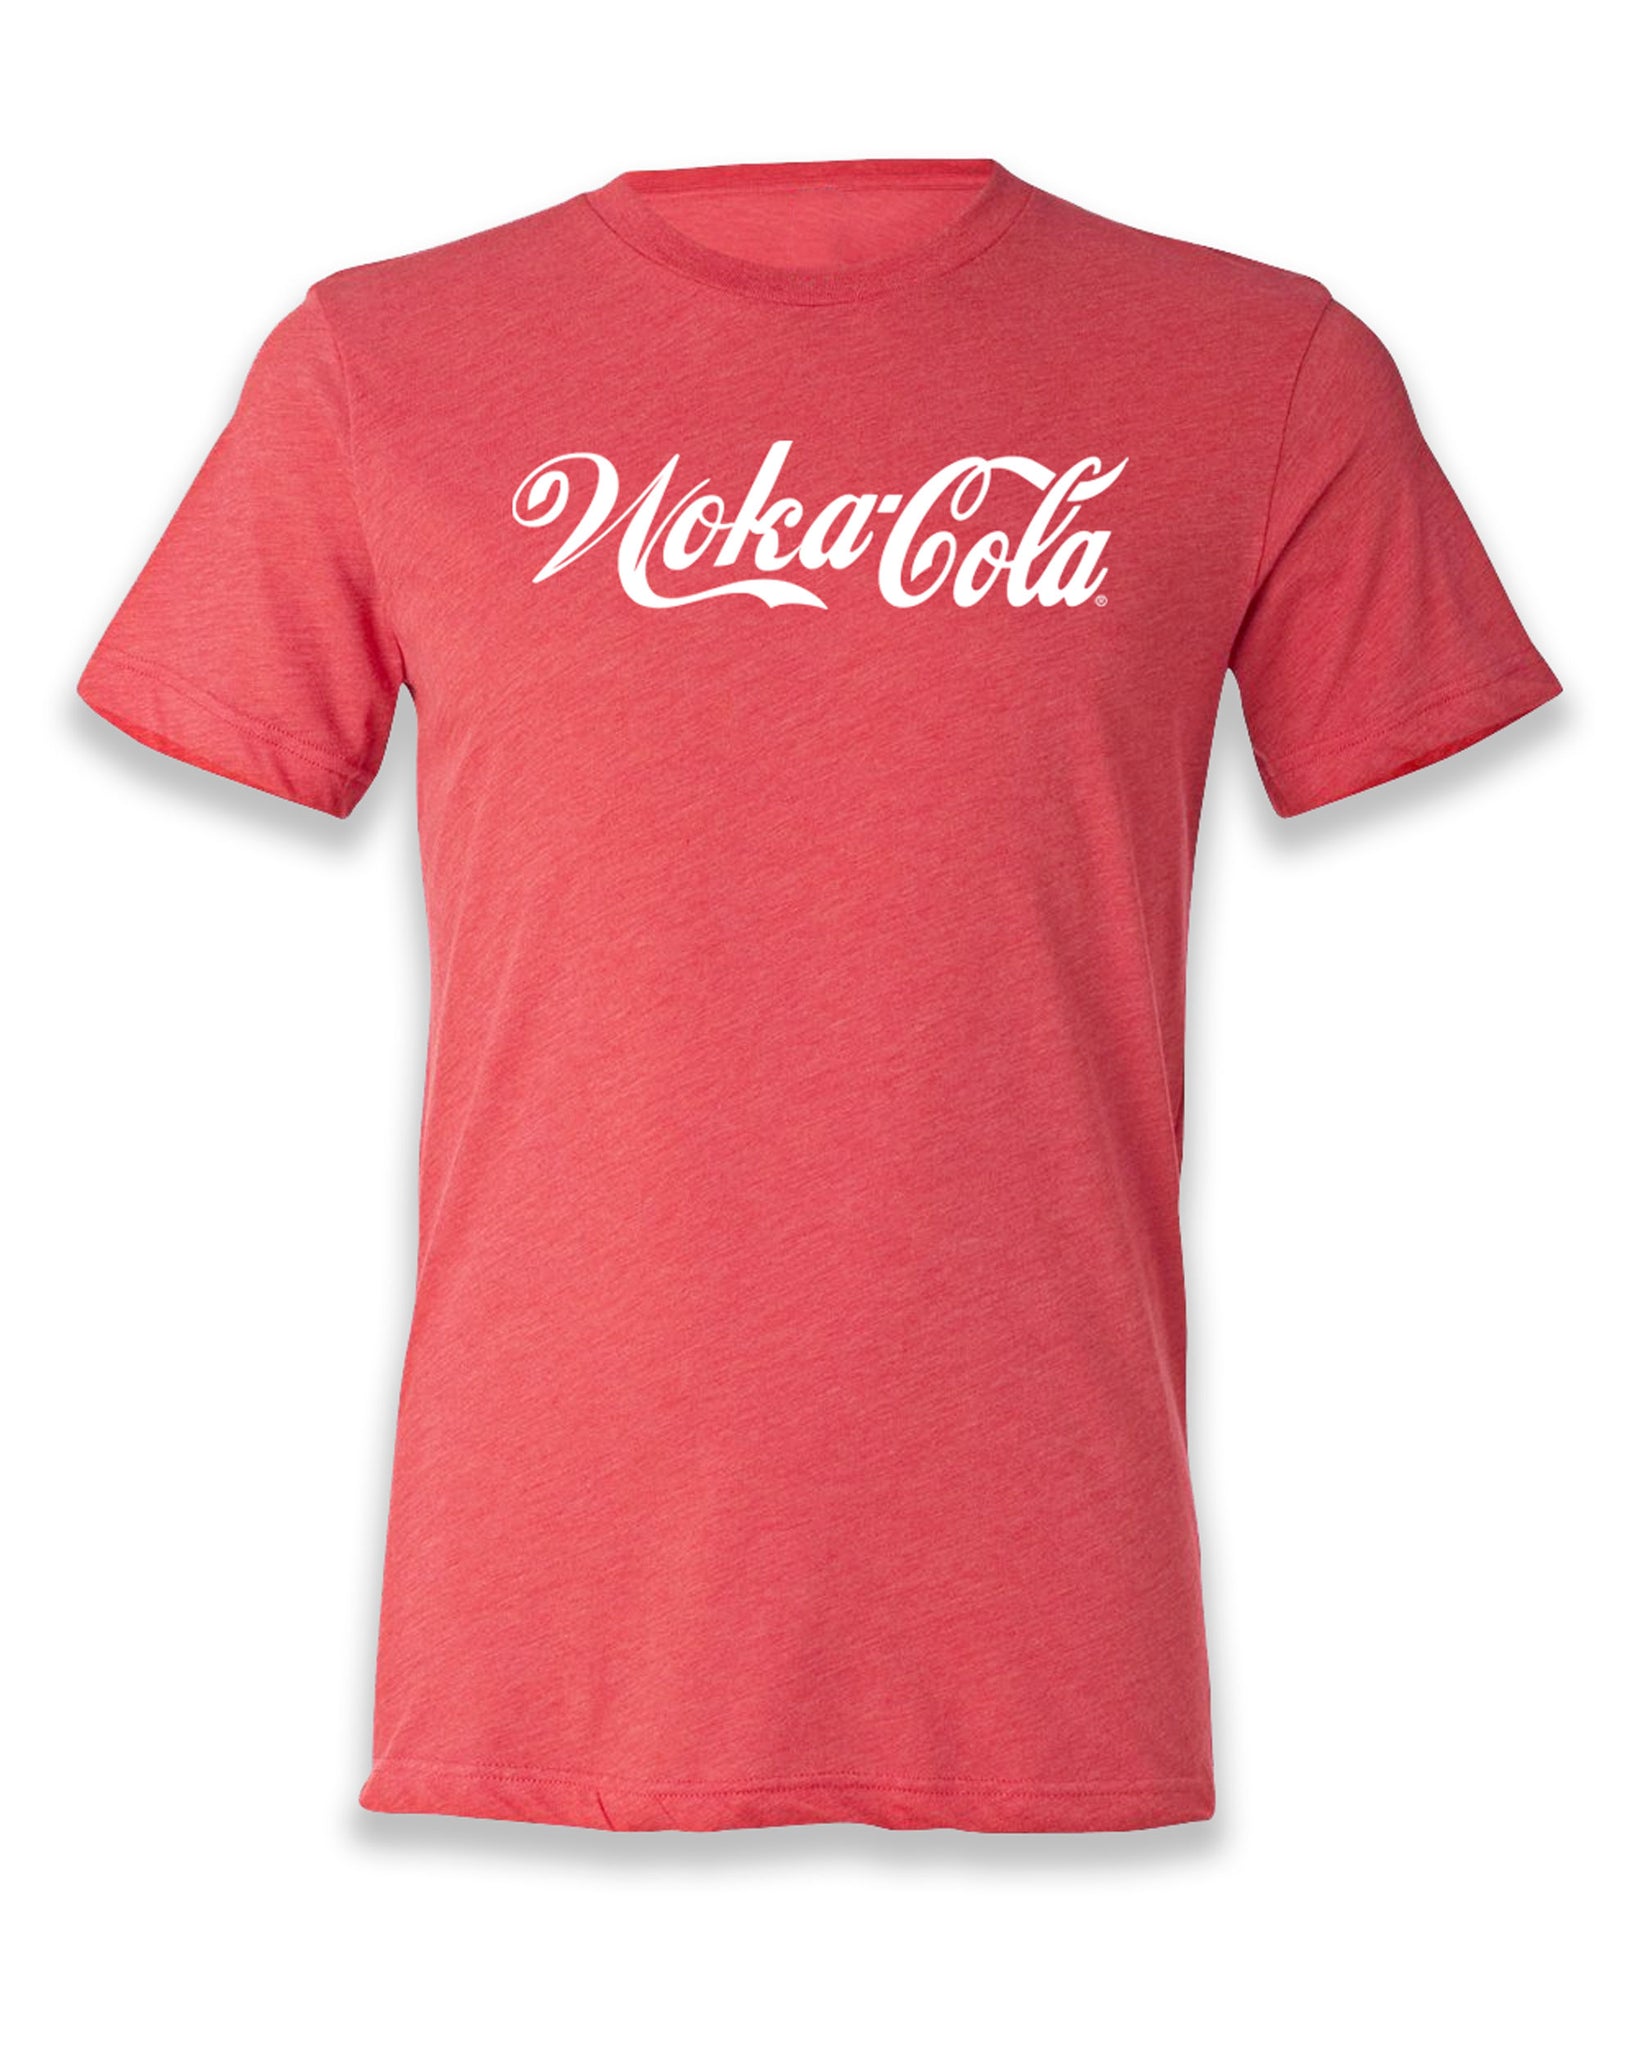 Woka-Cola T-shirt